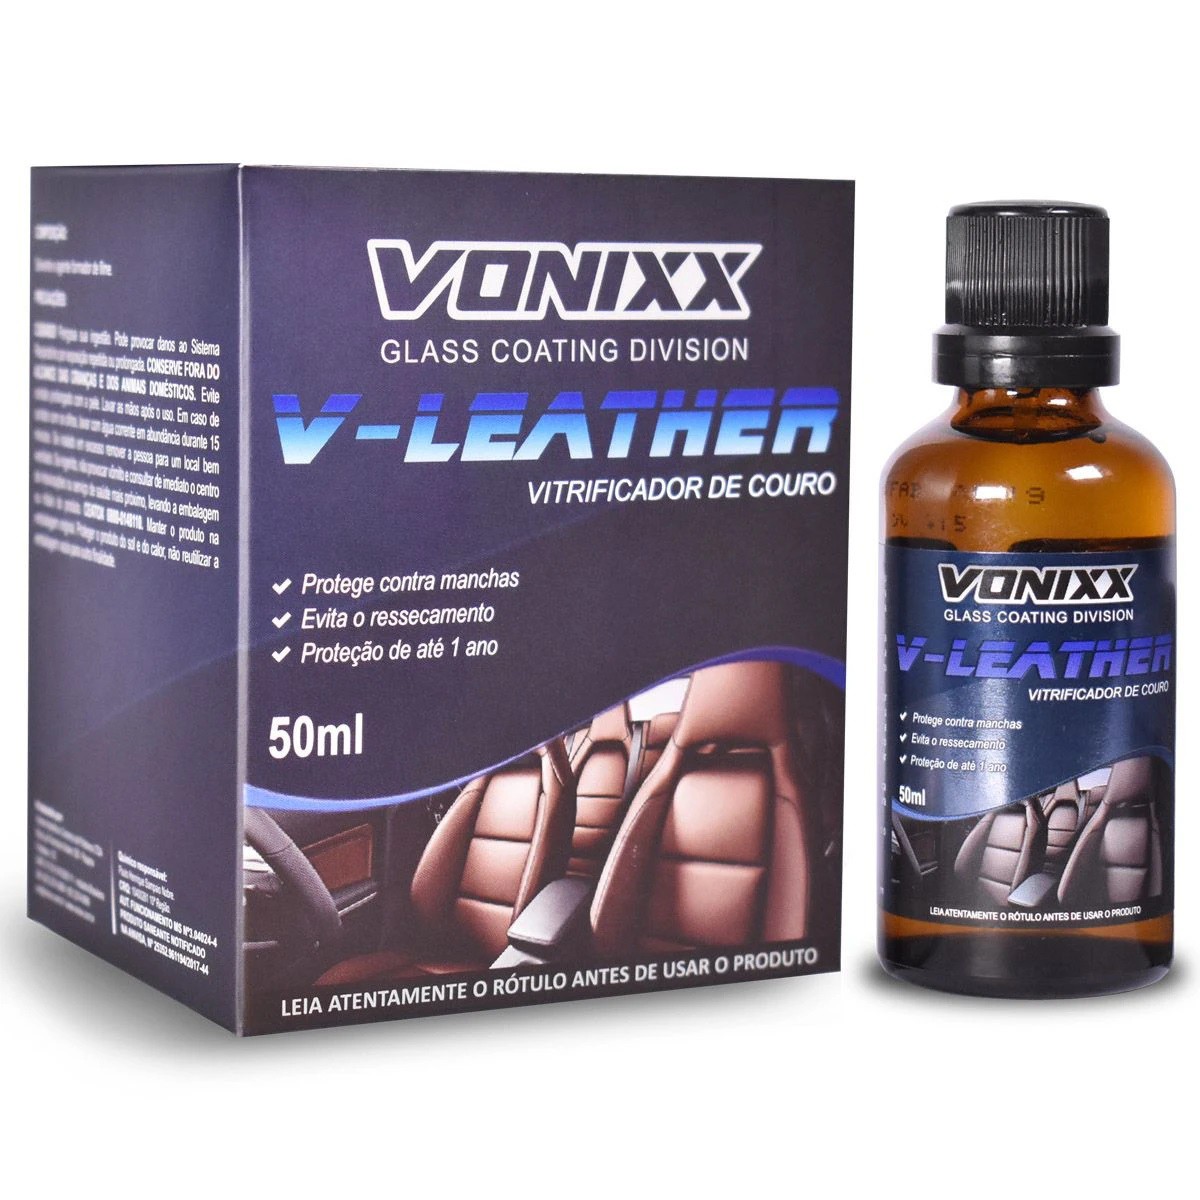 Vitrificador de Couro V-Leather 50ml Vonixx